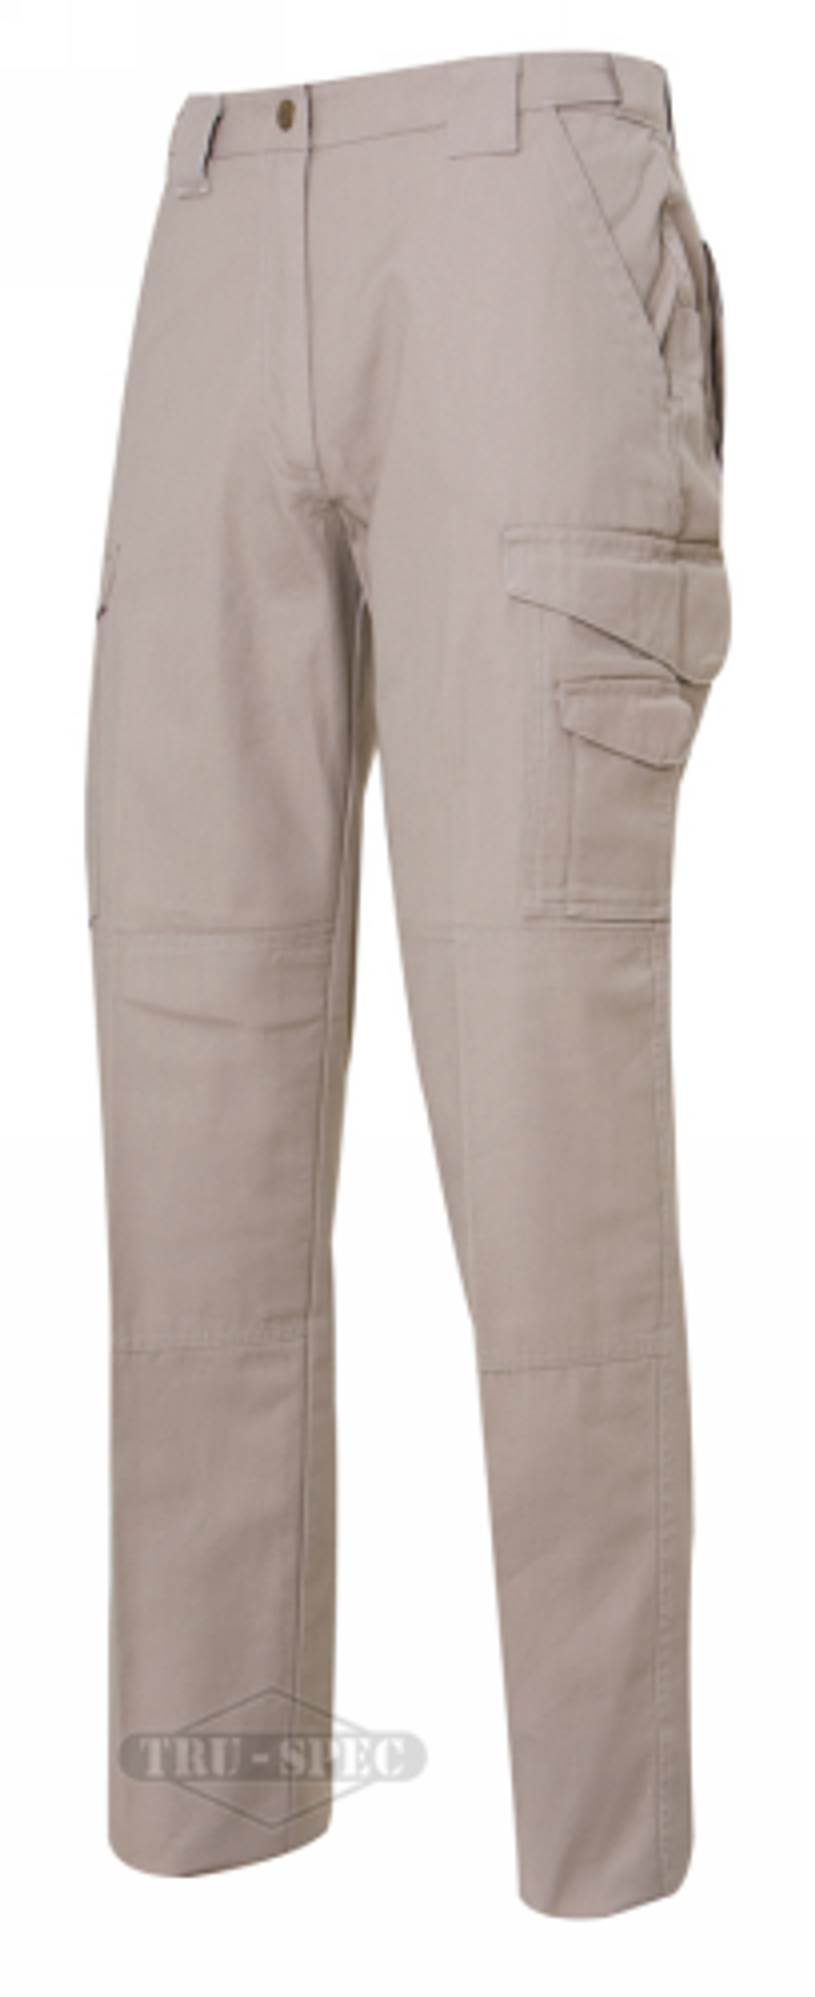 24-7 Women's Original Tactical Pants - KRTSP-1097008